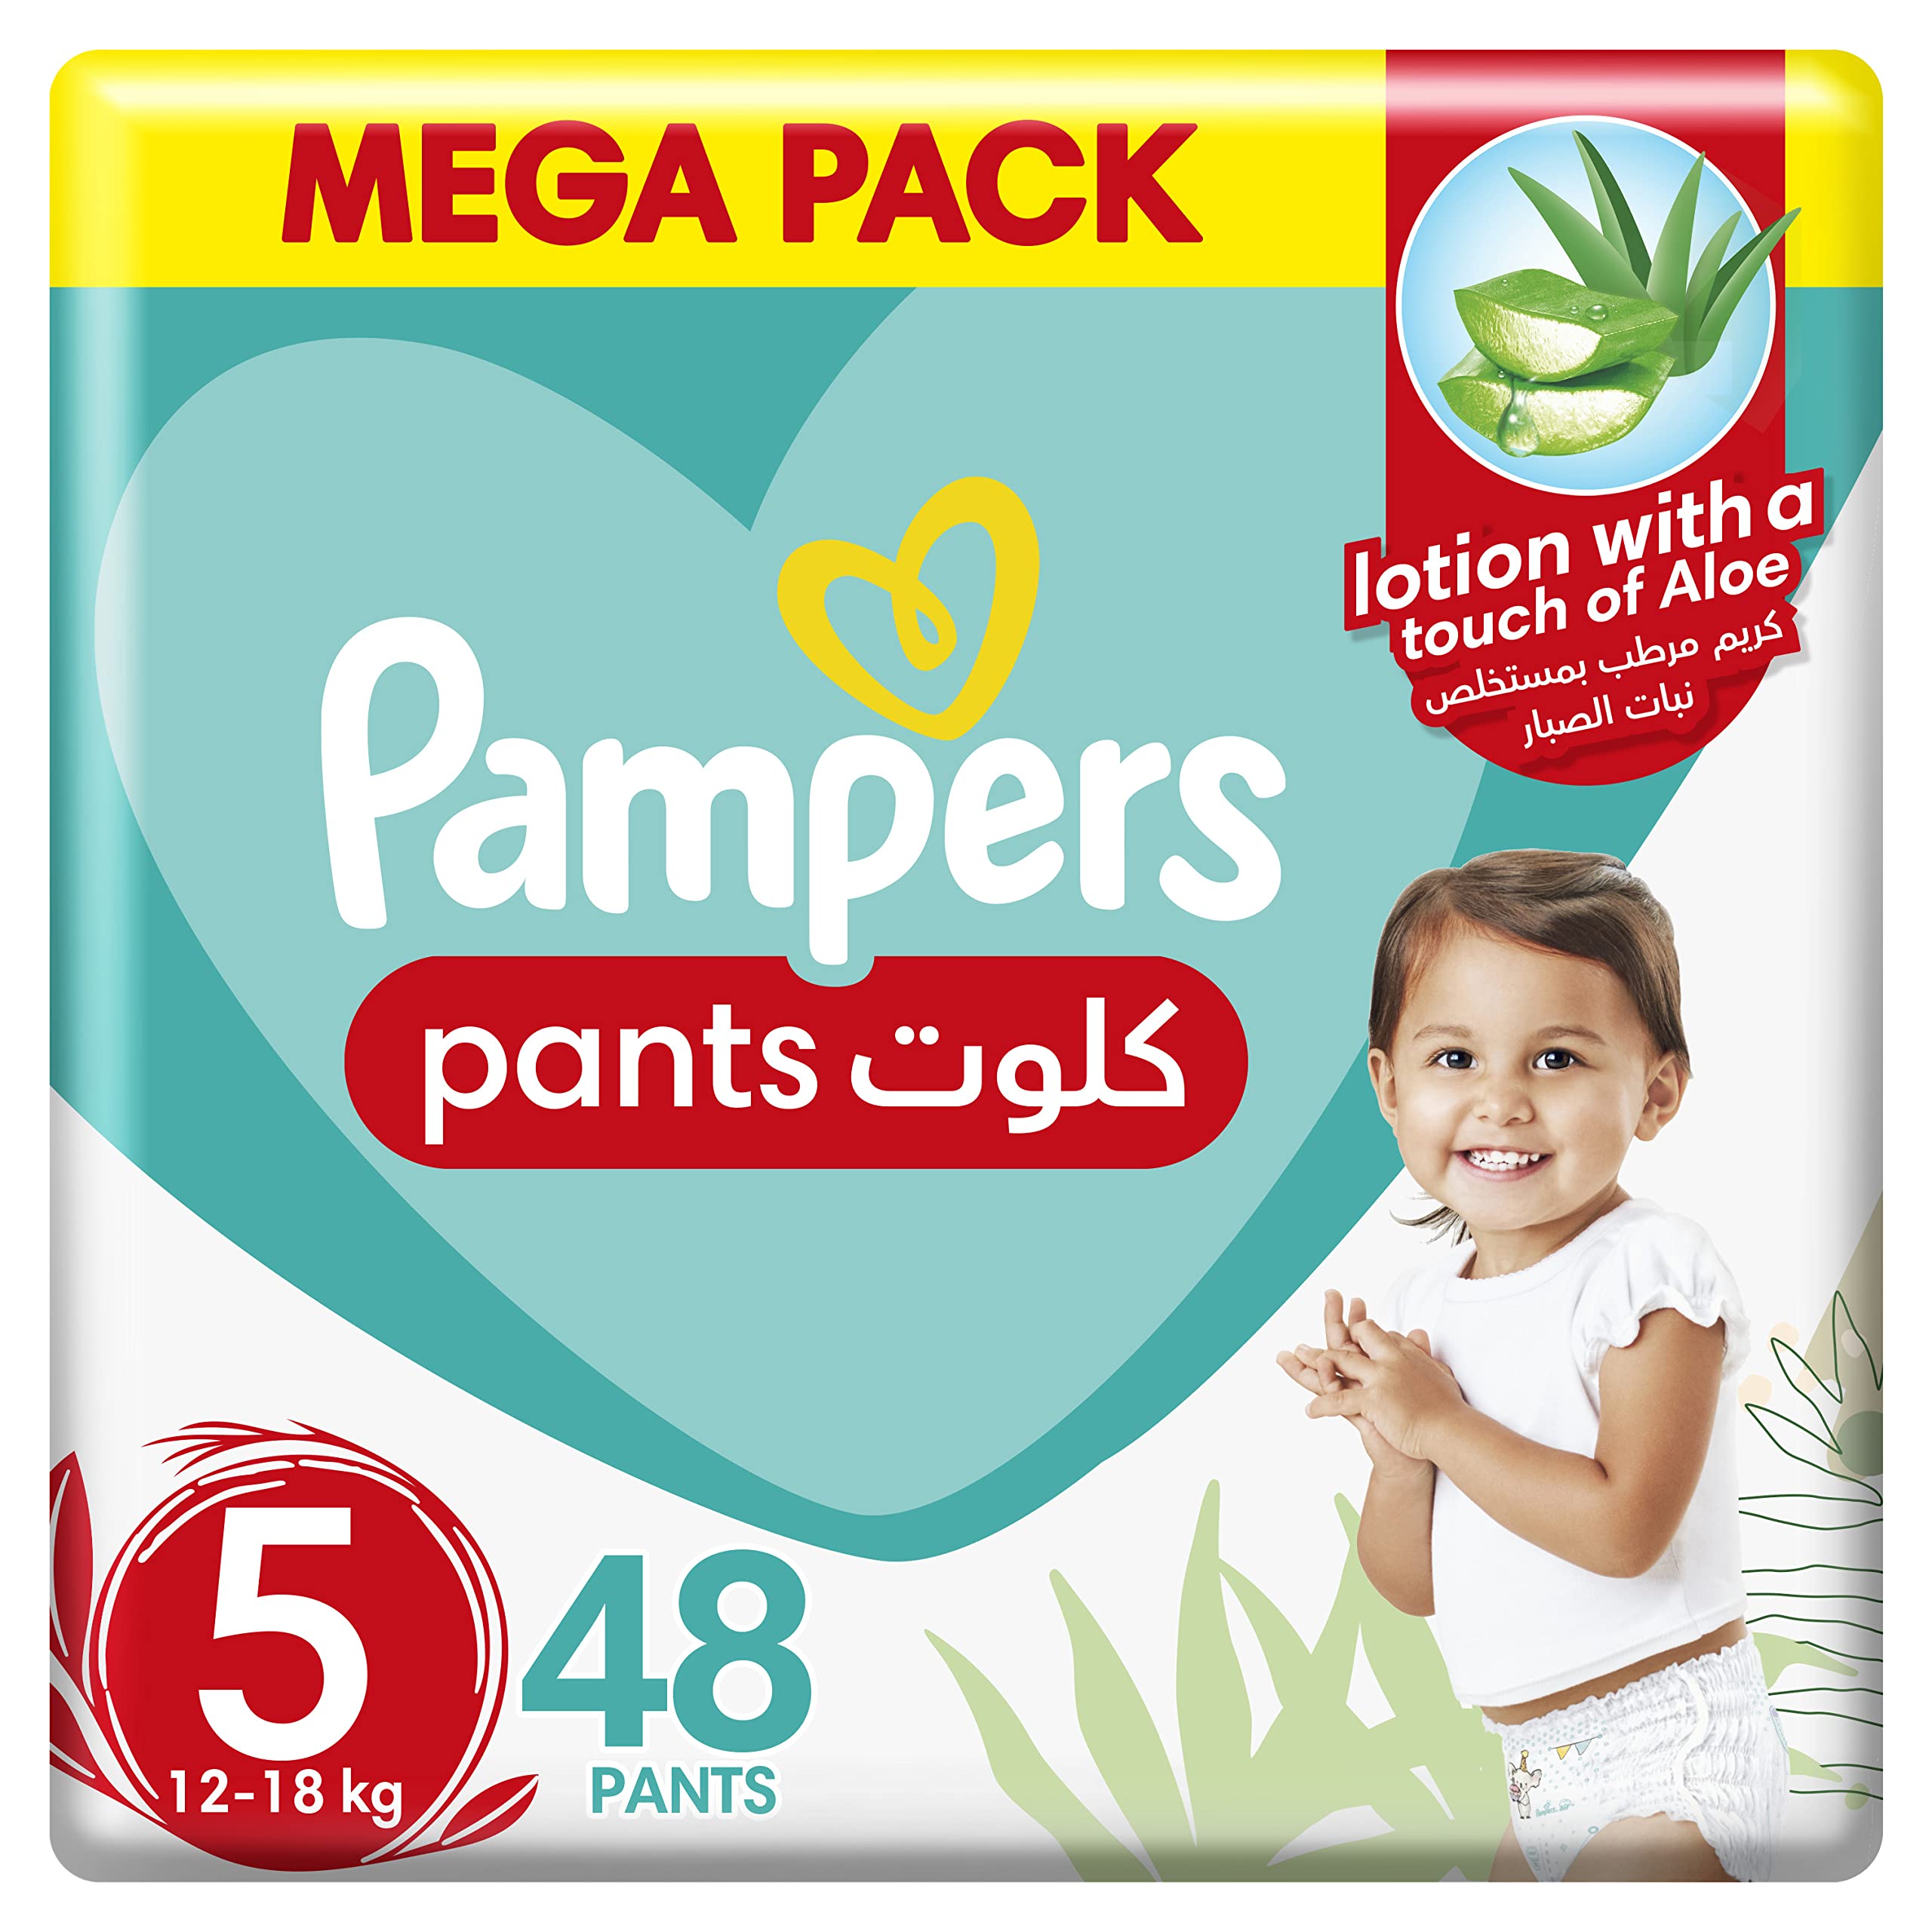 mega pack pampers pants 5